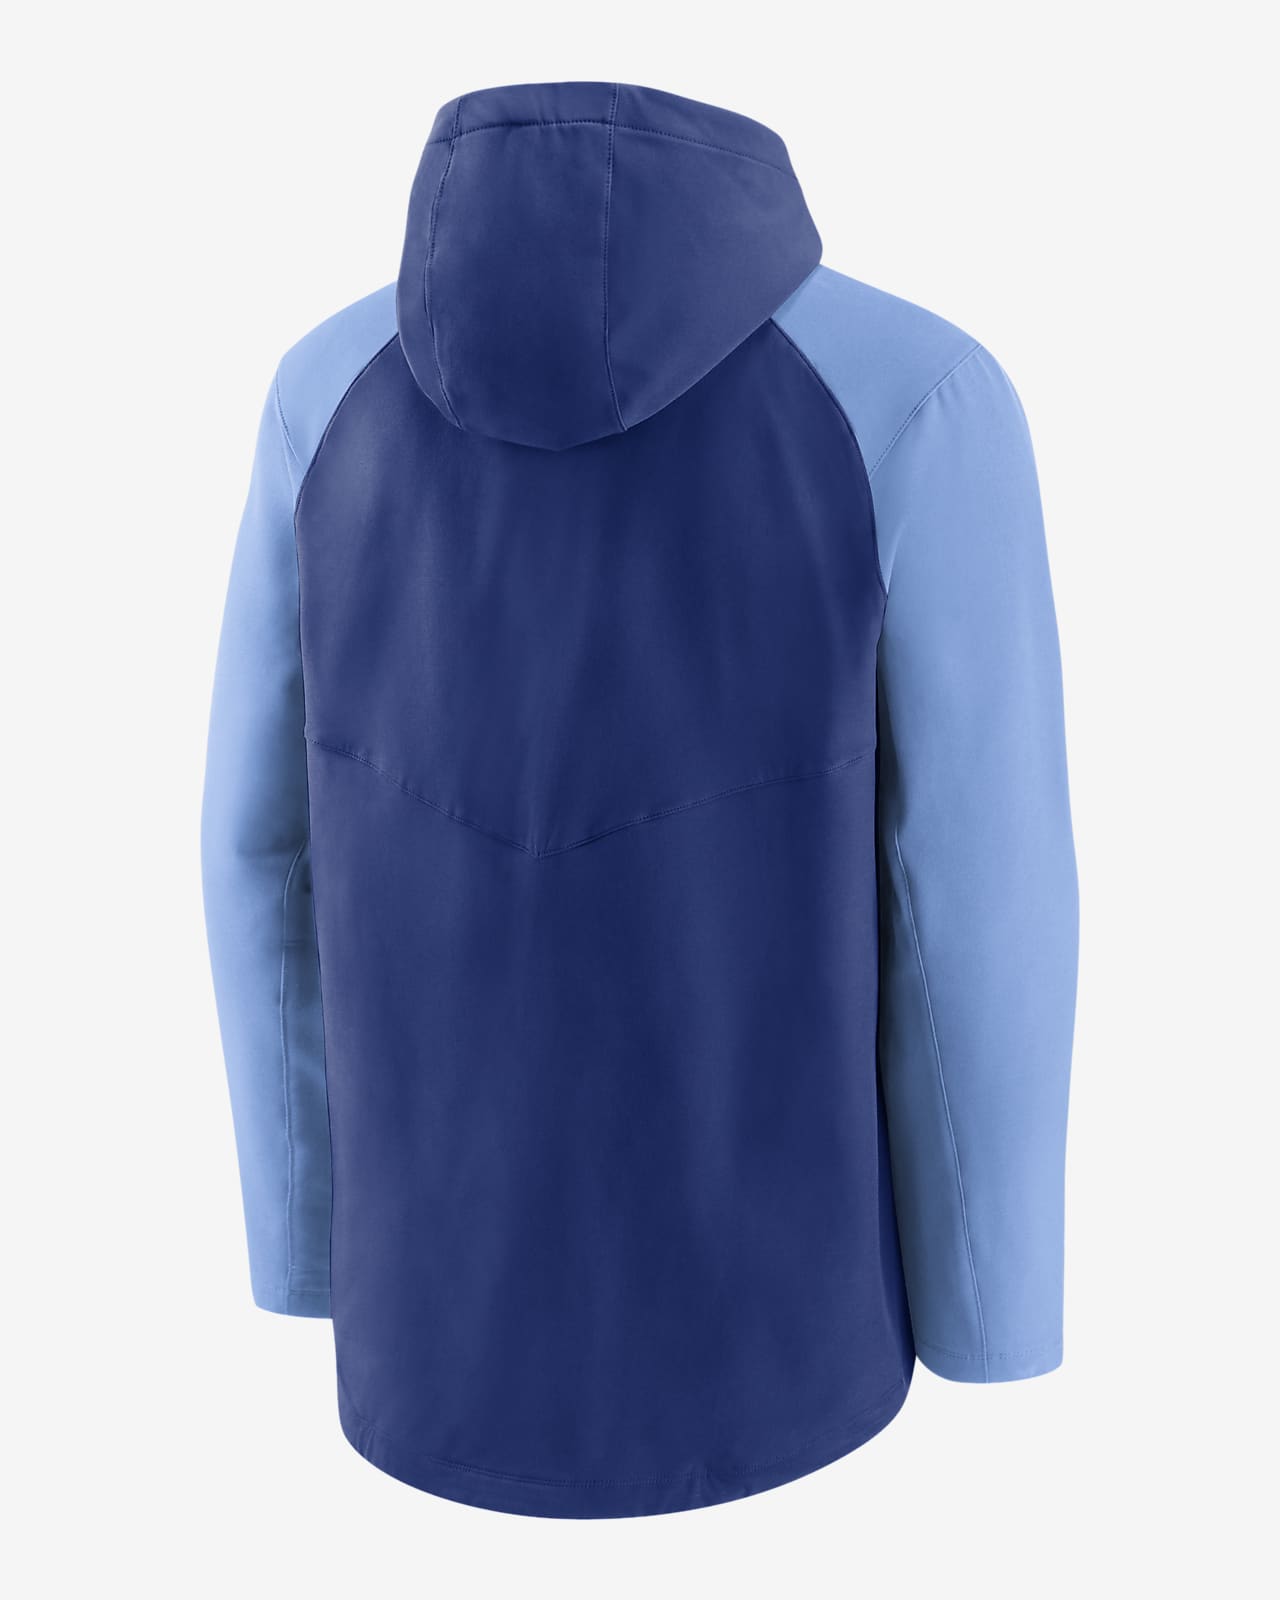 The Comfy Oversize Sweatshirt Hoodie Cyber Monday Sale 2019